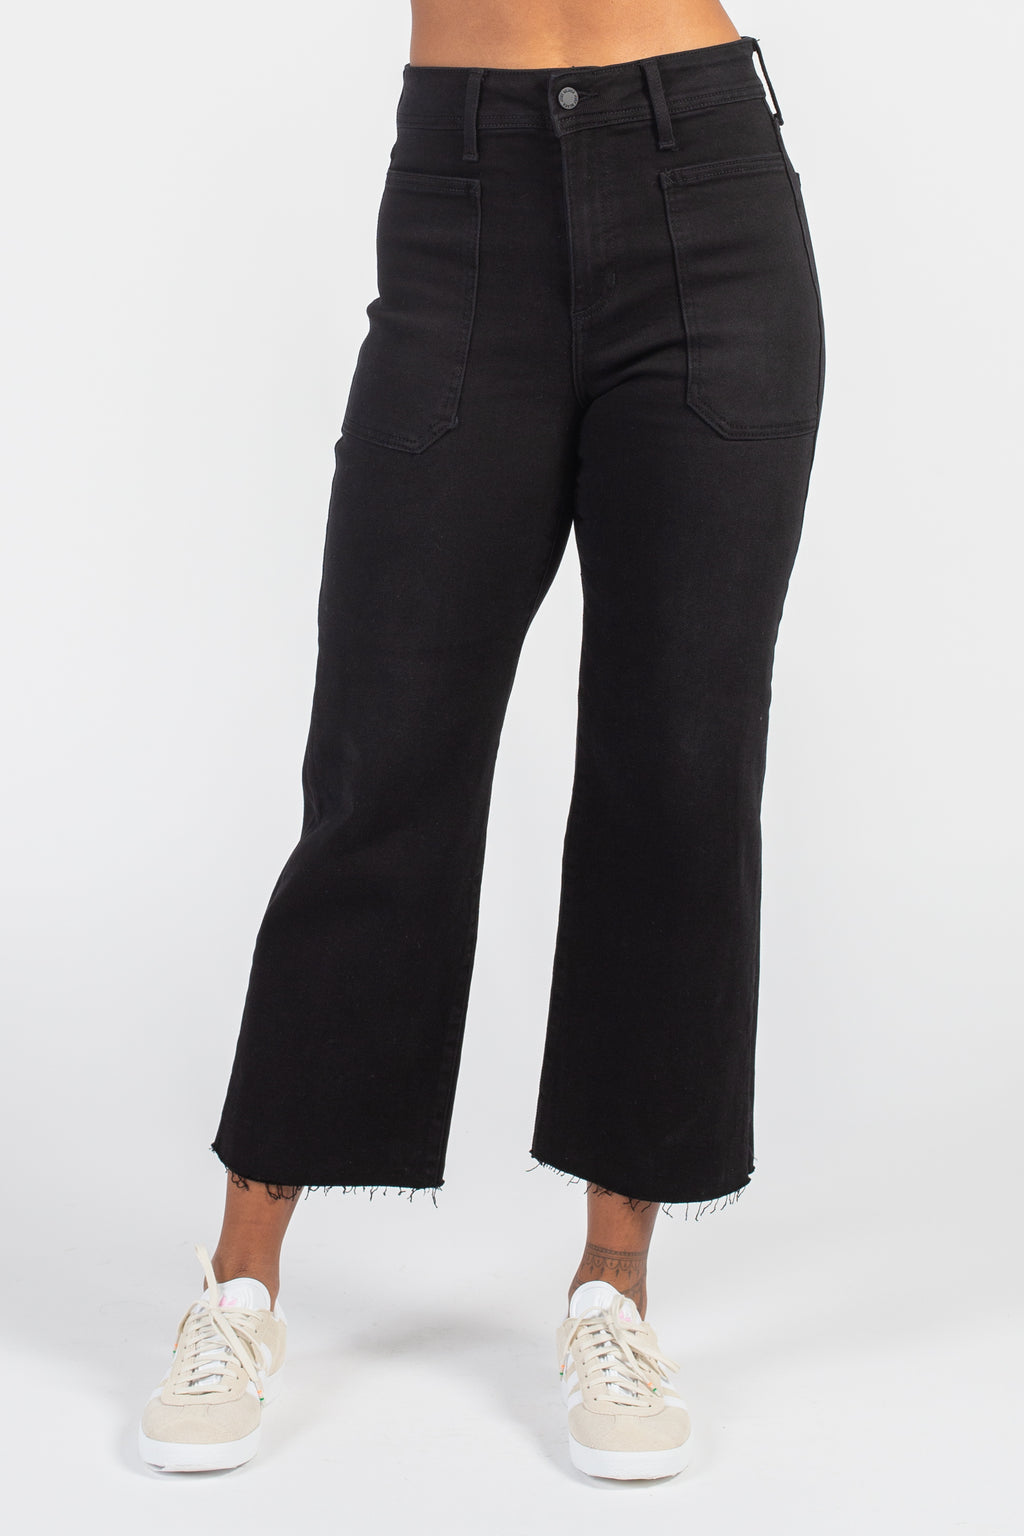 Buy the NWT Womens Black Denim Regular Fit Pockets Dark Wash